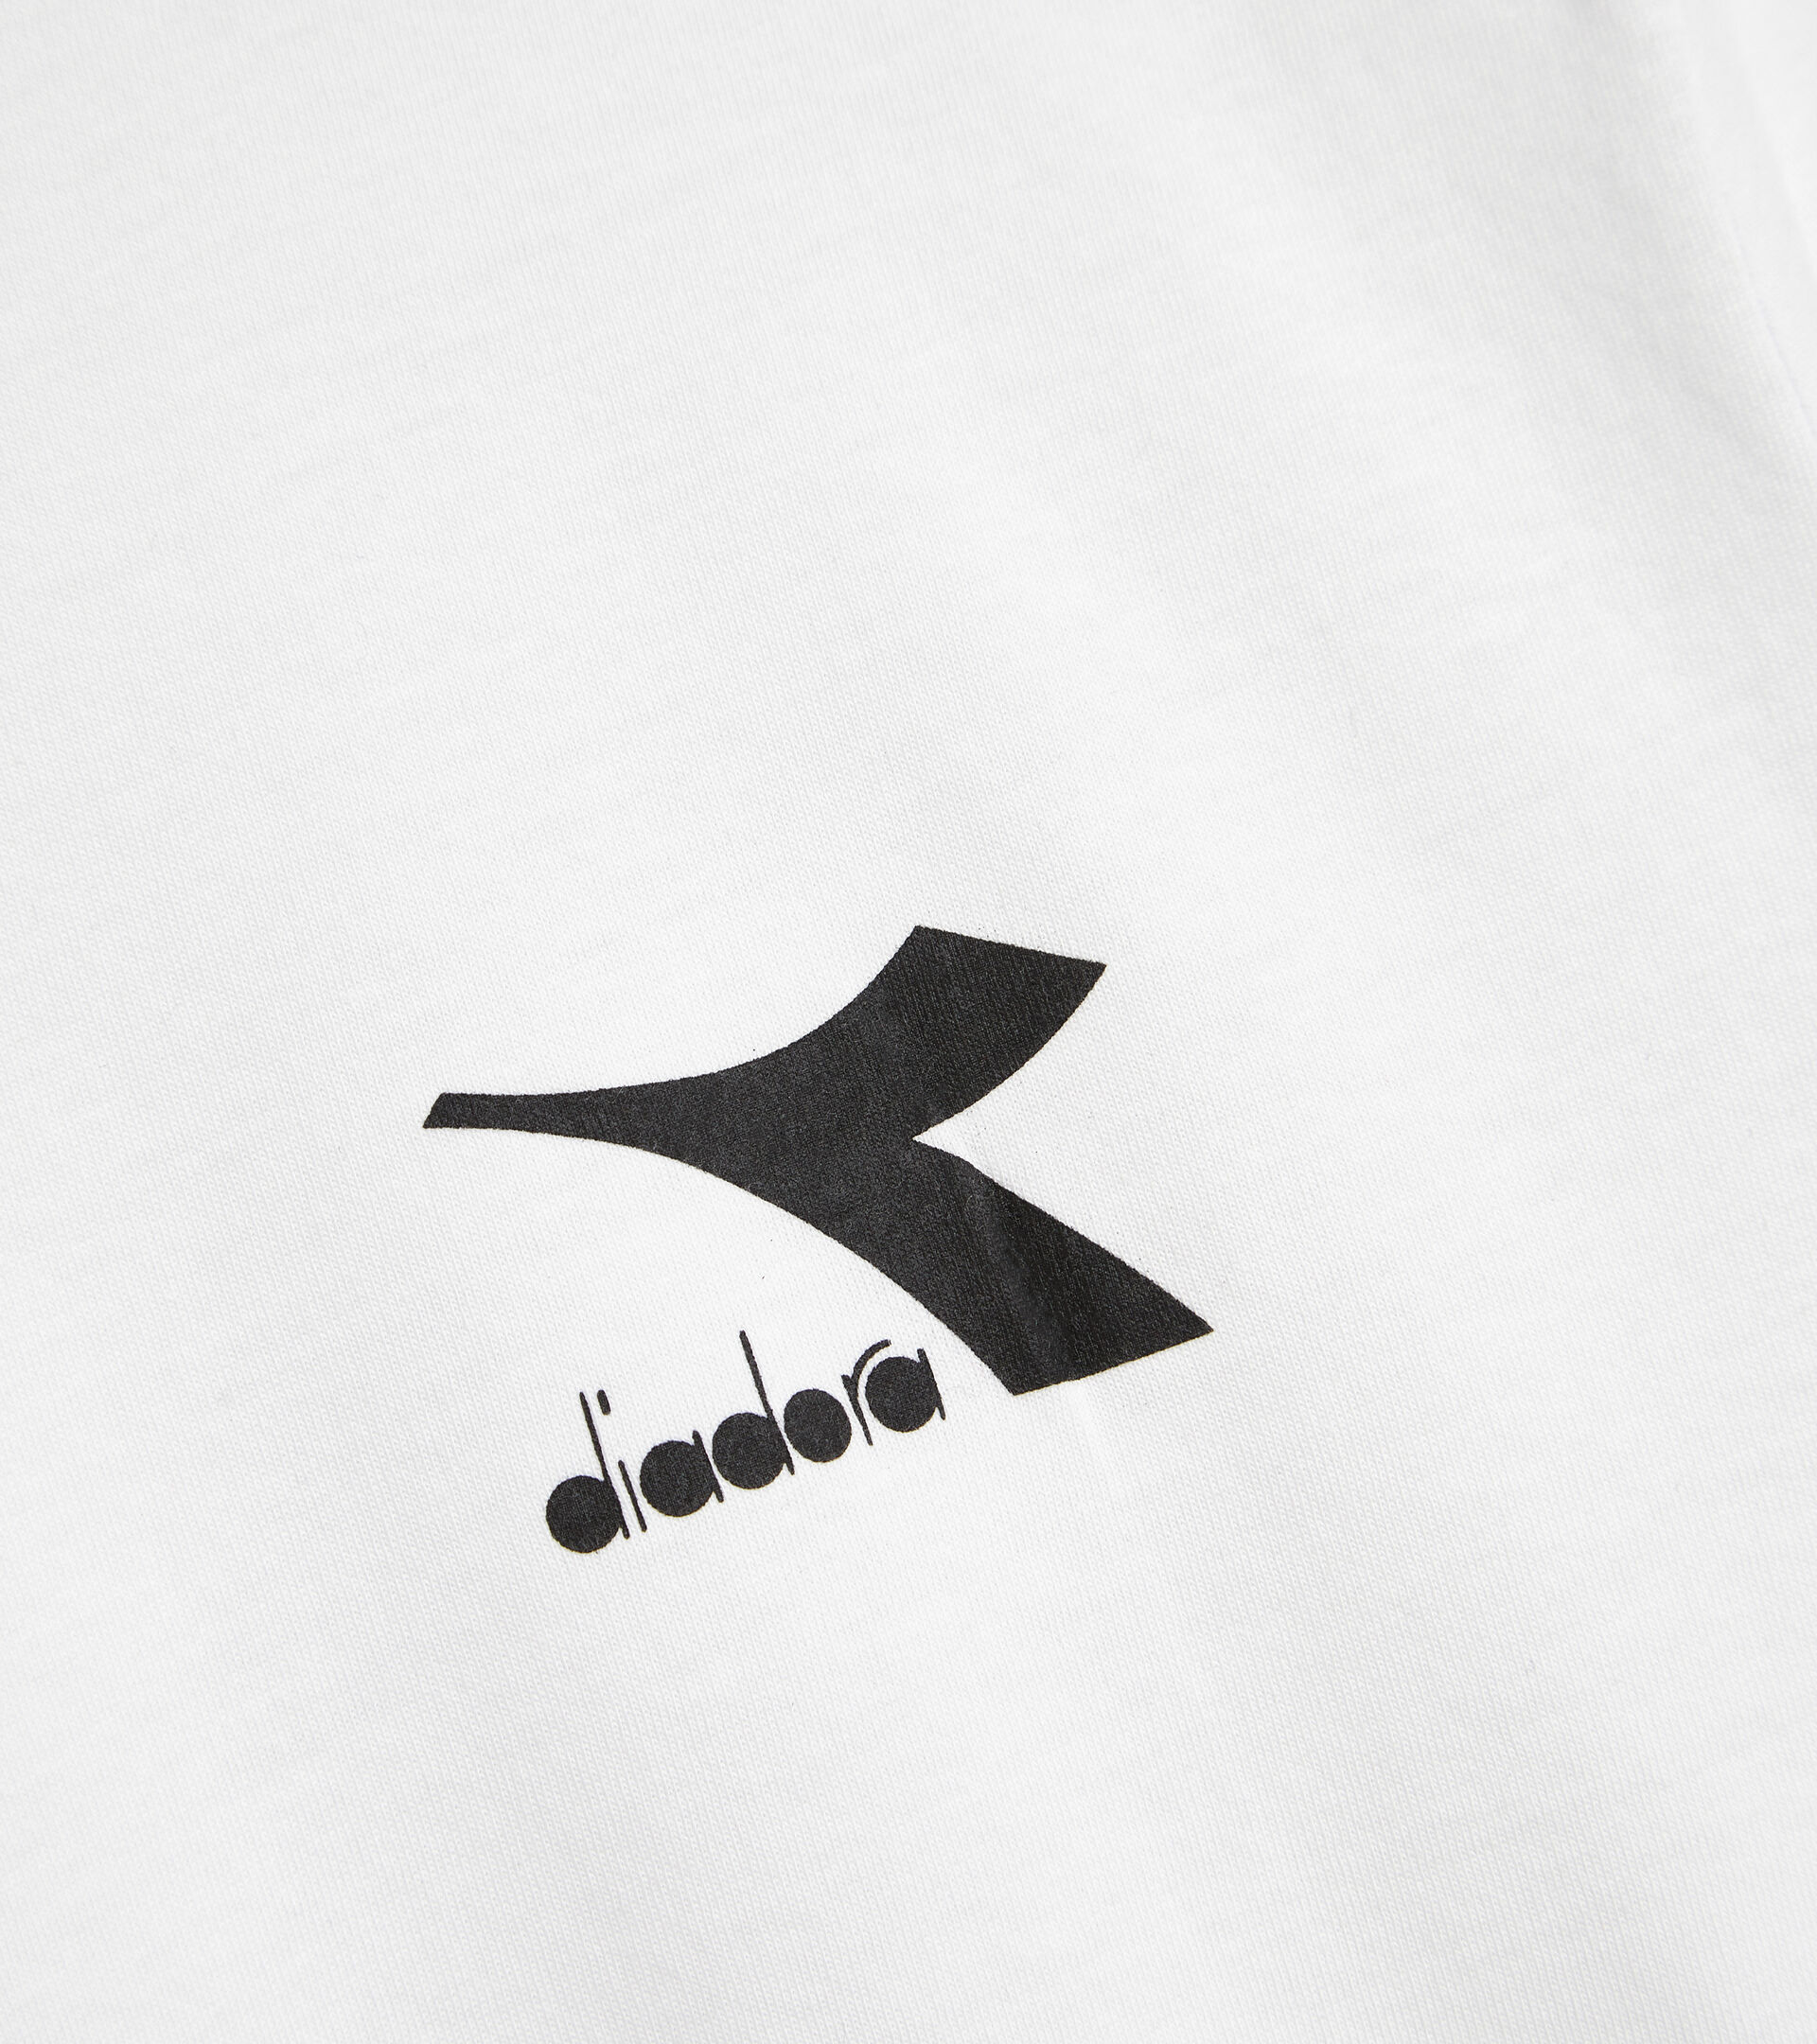 T-shirt en coton - Homme T-SHIRT SS CORE BLANC VIF - Diadora